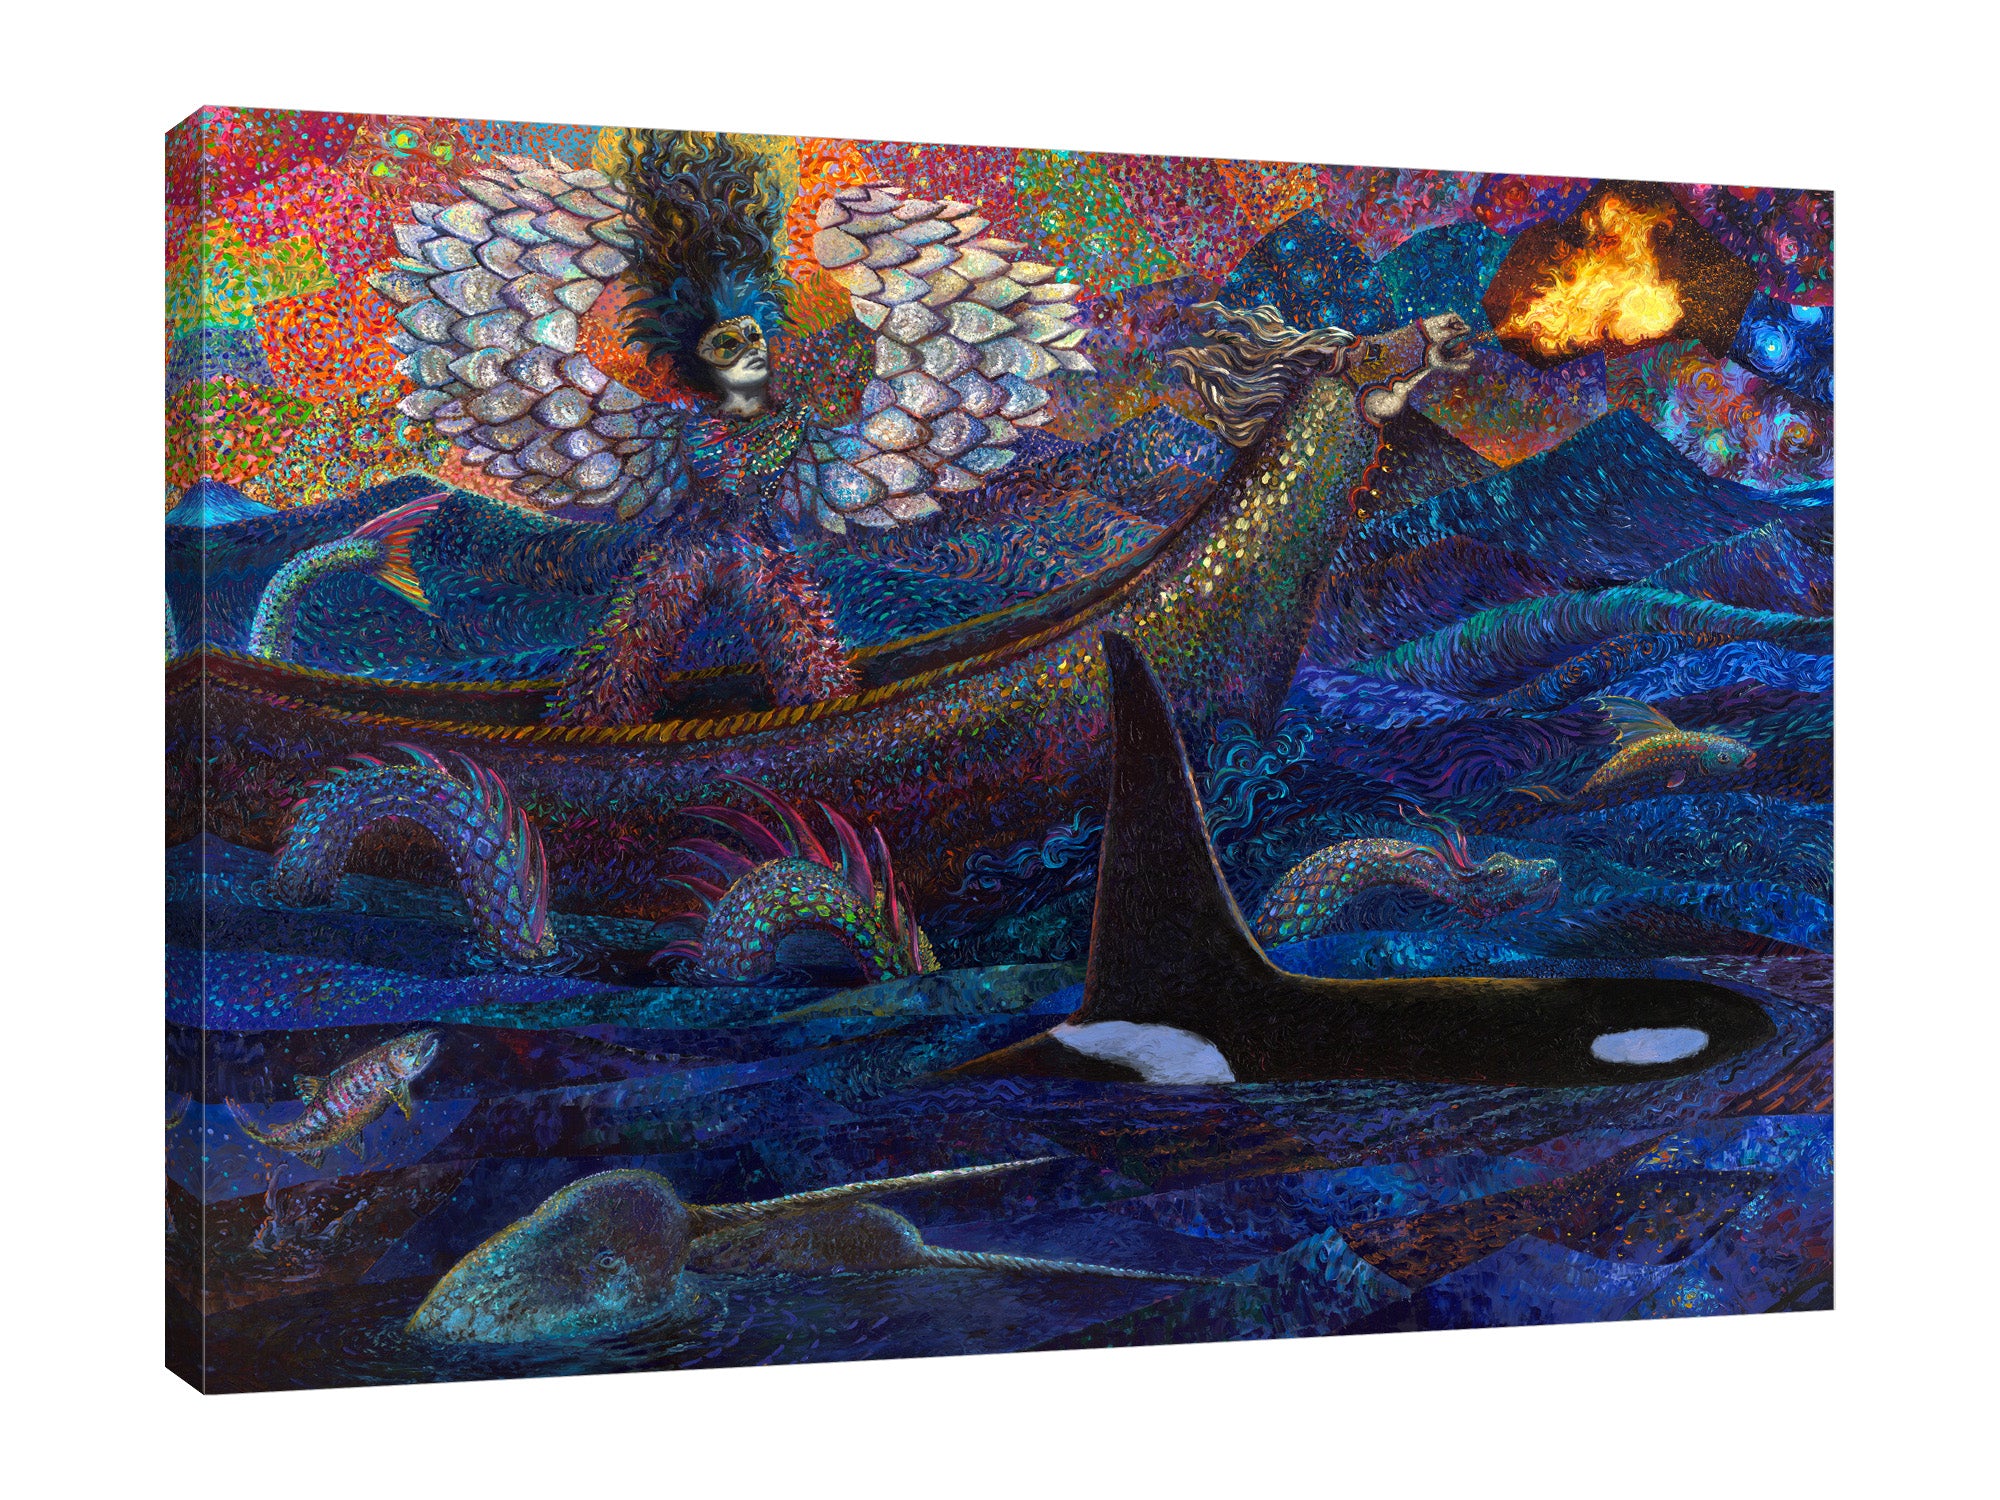 Iris-Scott,Modern & Contemporary,Animals,Landscape & Nature,Nautical & Beach,Impressionism,surreal,finger paint,animal,nature,ocean,nautical,fish,sea,dragon,whale,mask,,